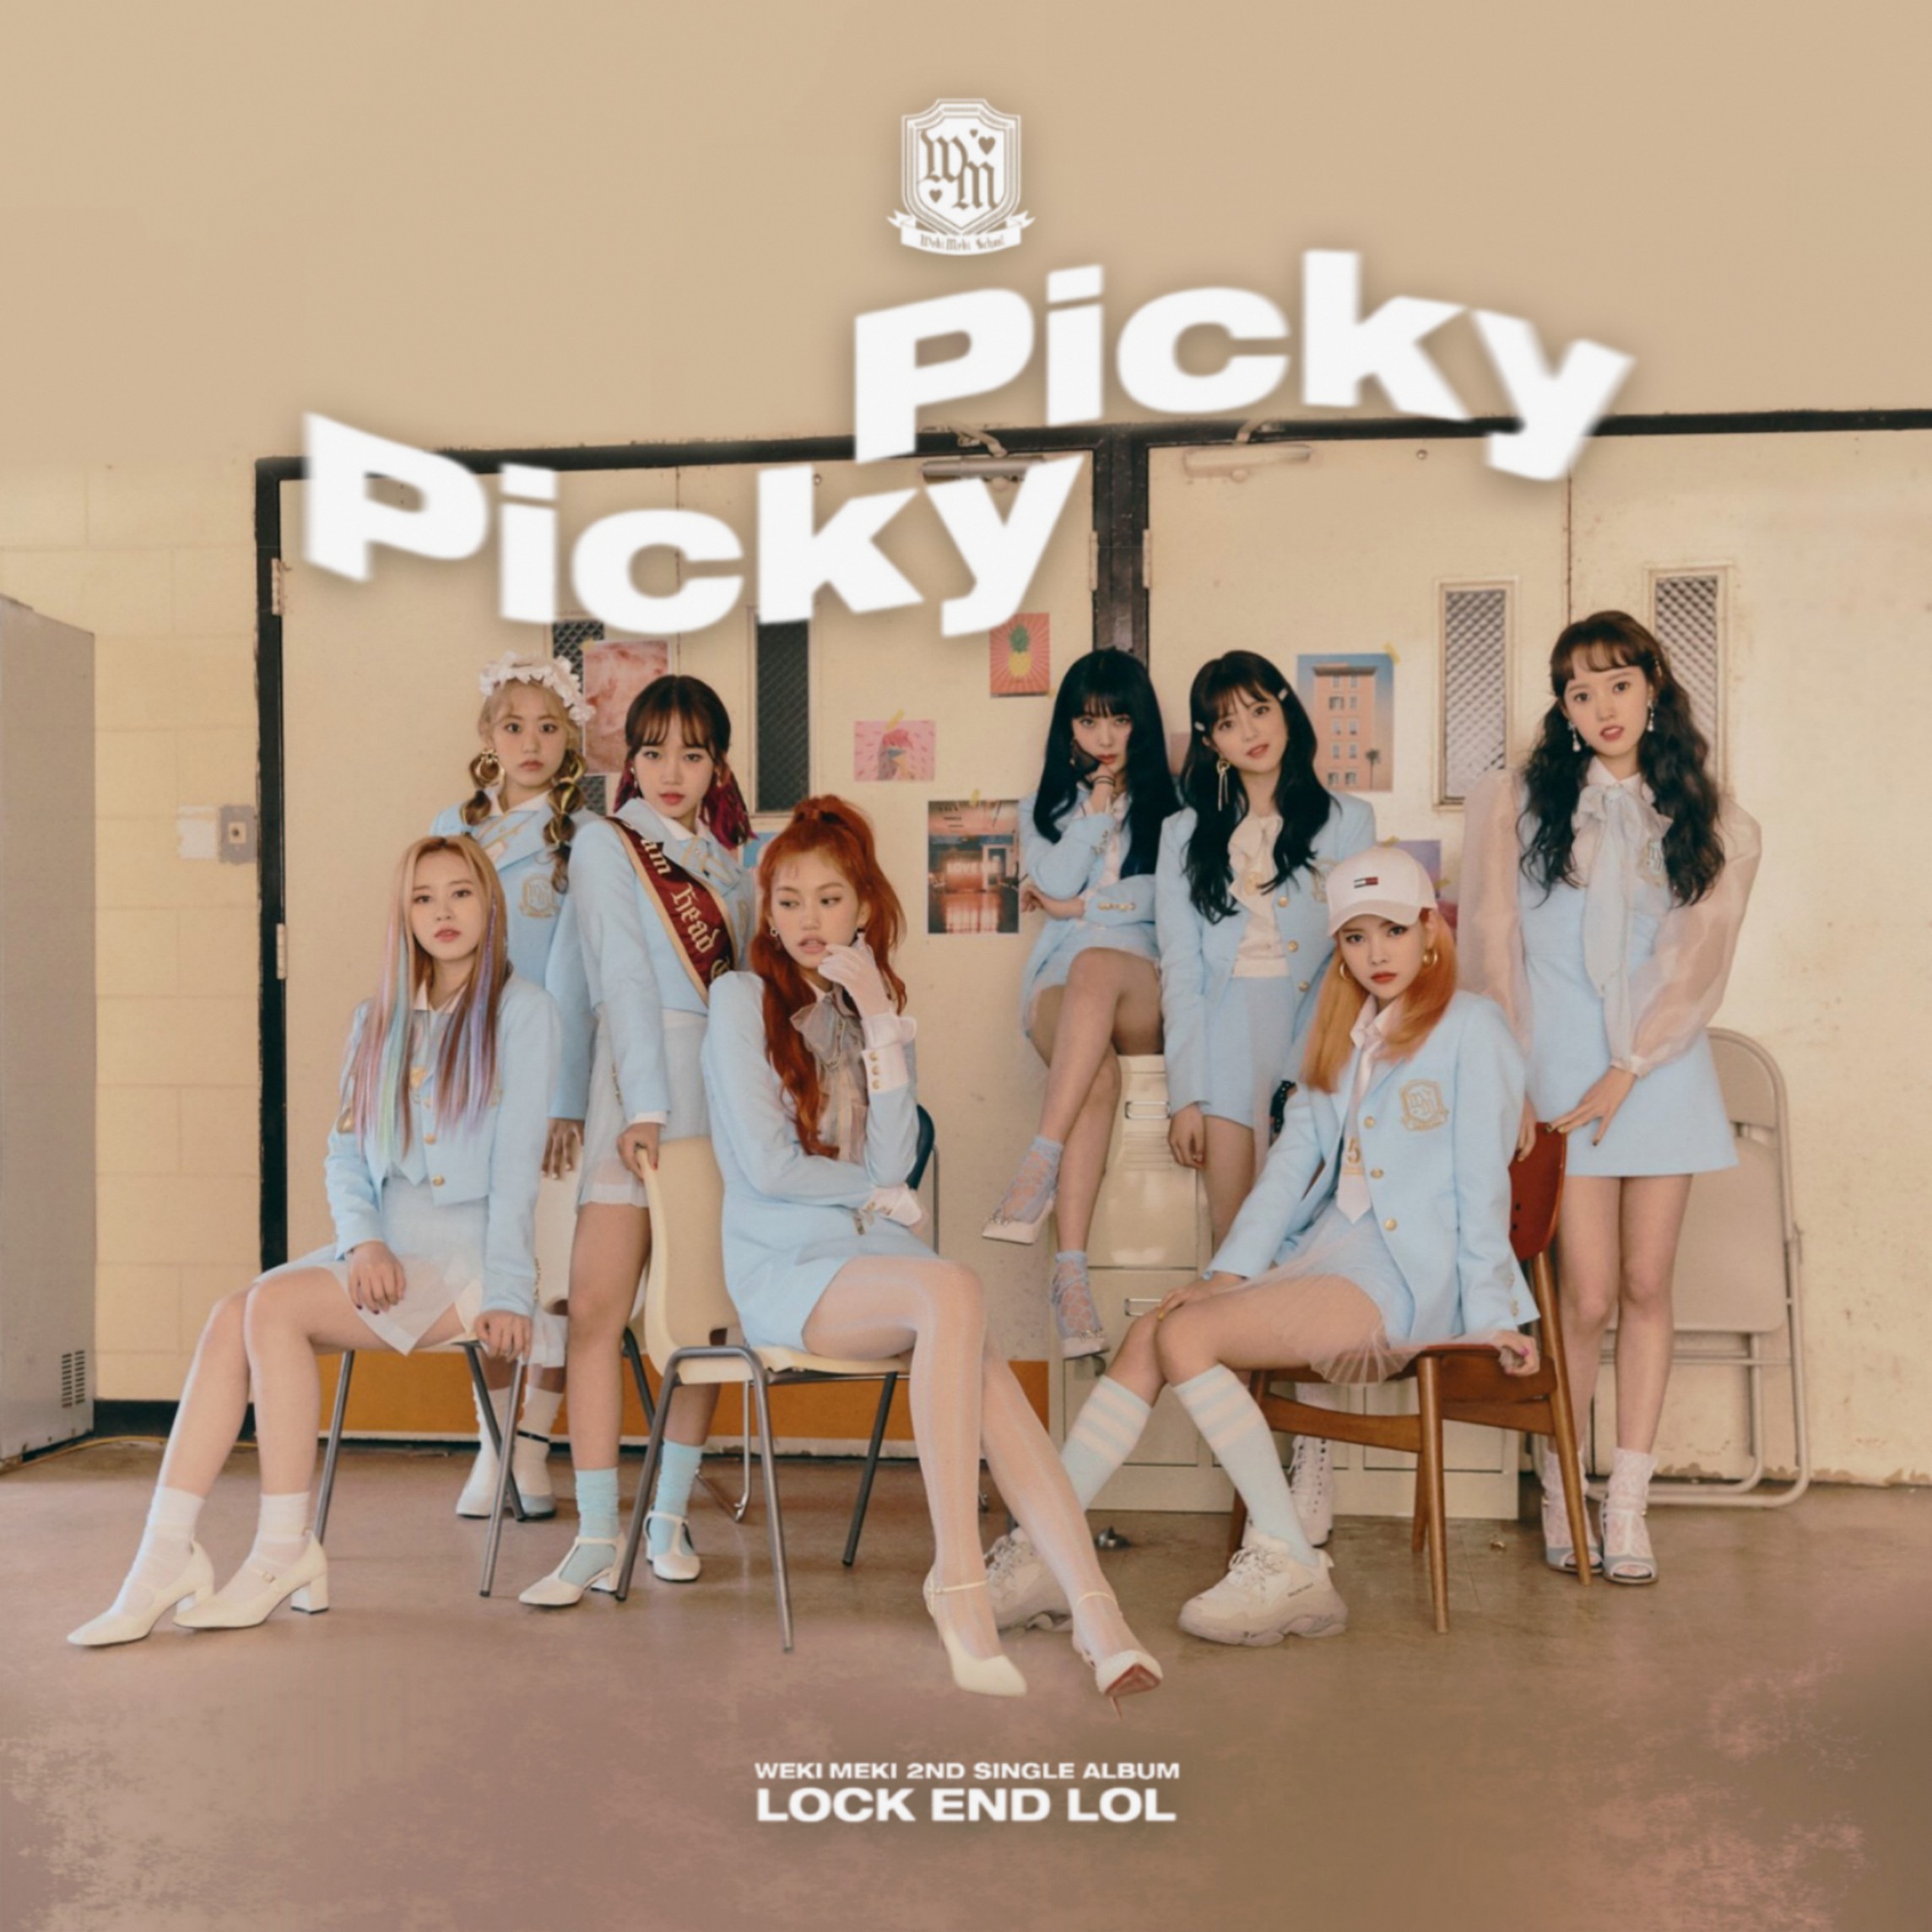 weki-meki-picky-picky-lock-end-lol-album-cover-by-lealbum-on-deviantart